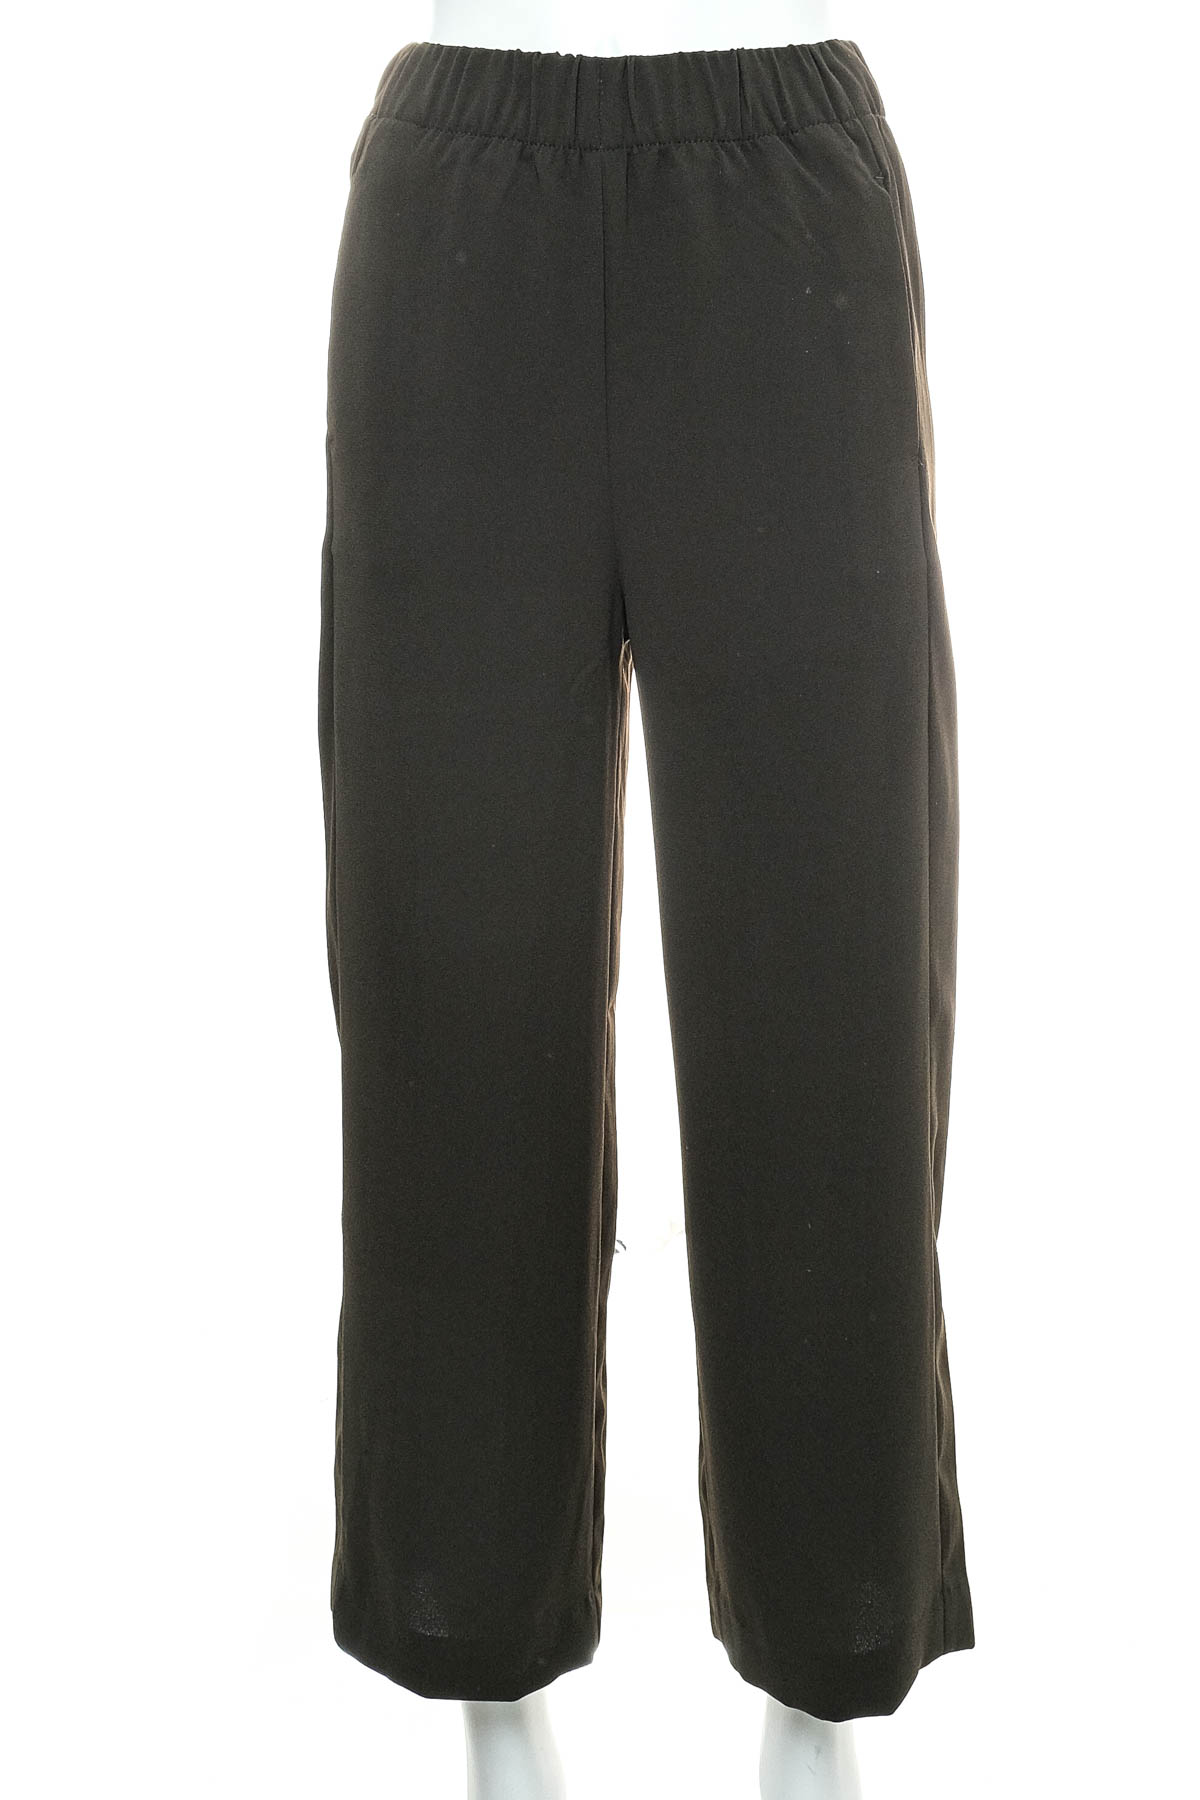 Women's trousers - H&M - 0